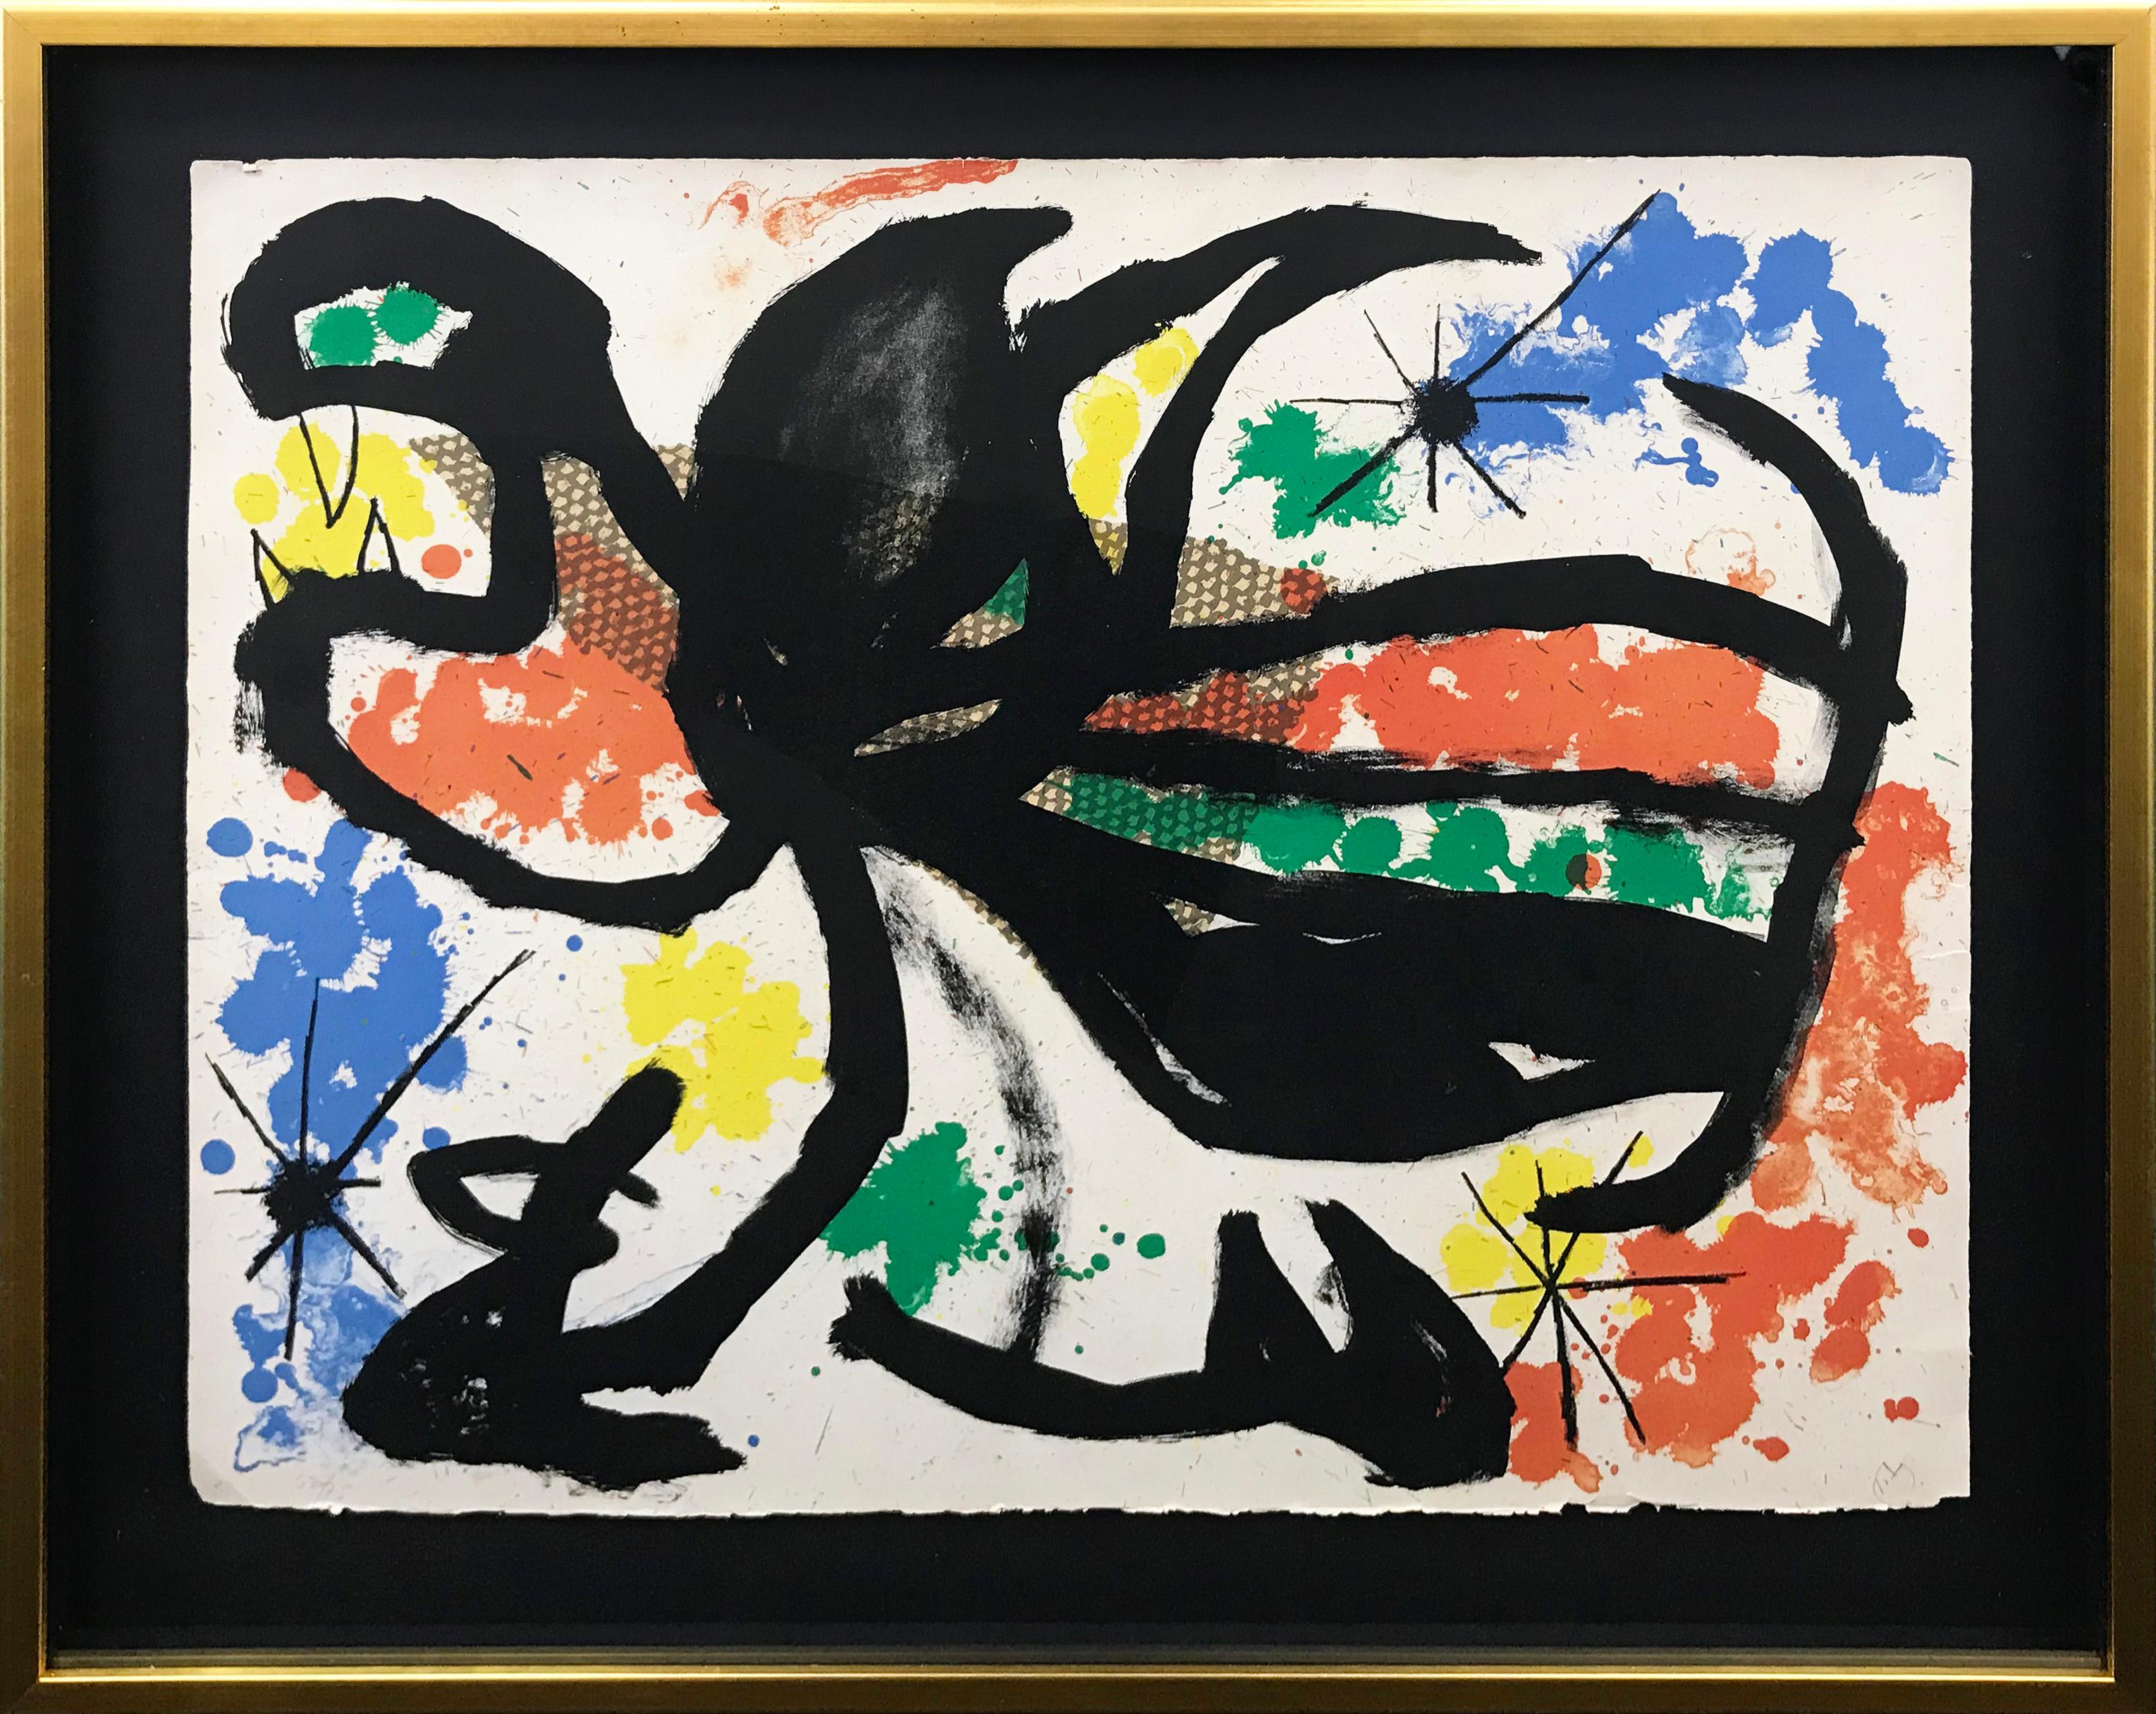 ALBUM 19, PLANCHE 3 - Print by Joan Miró